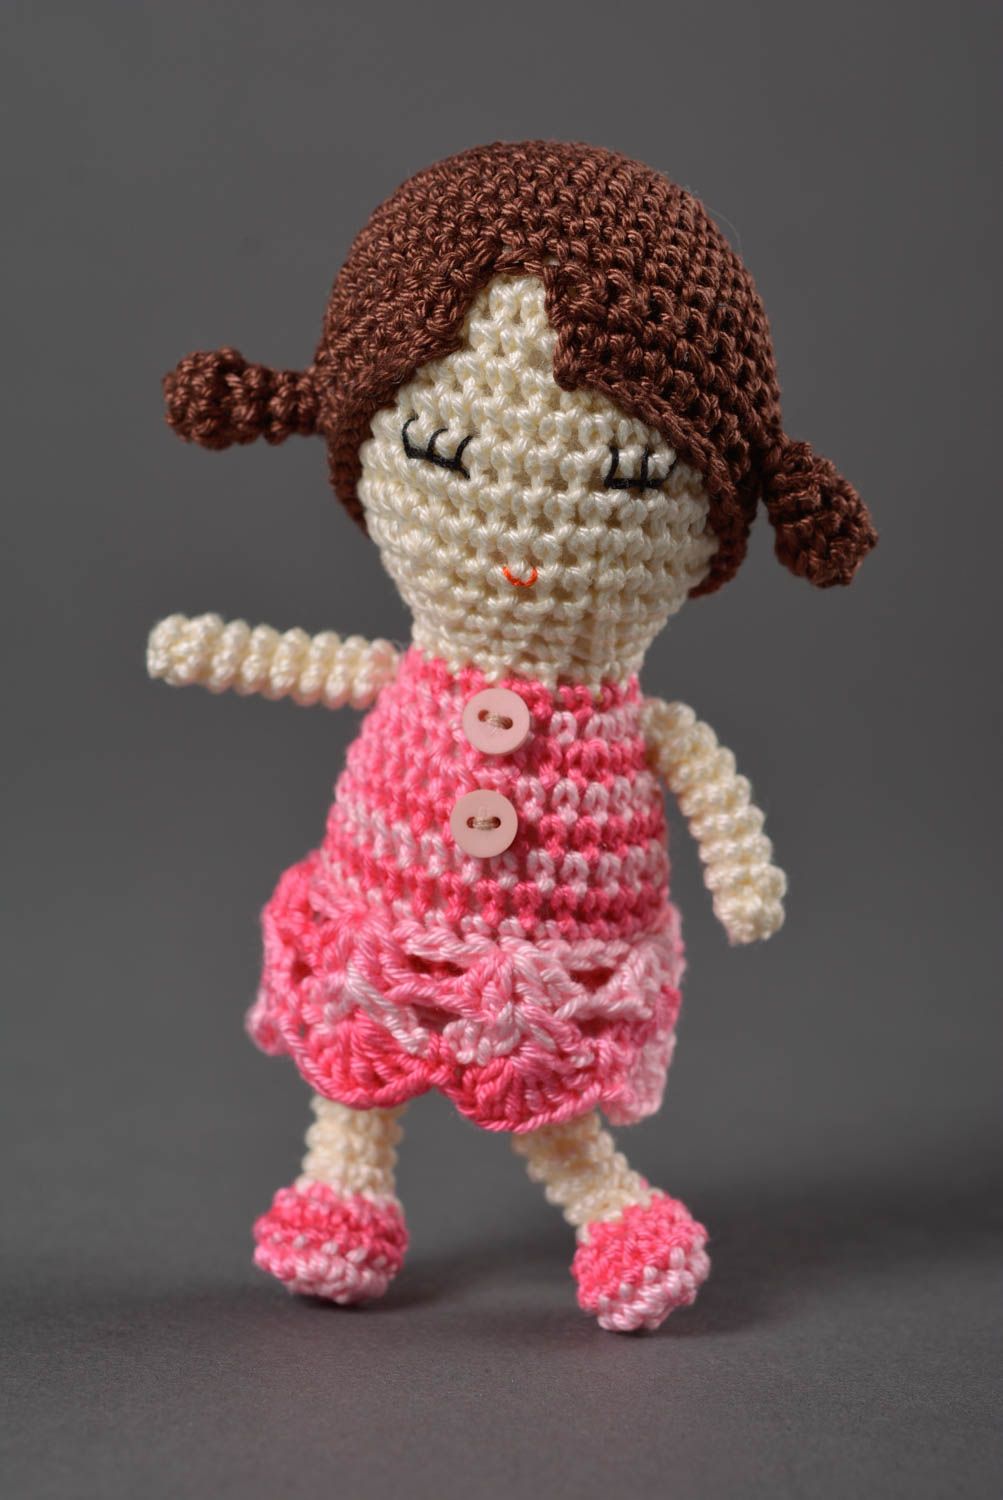 Beautiful handmade stuffed soft toy cute toys crochet toy birthday gift ideas photo 1